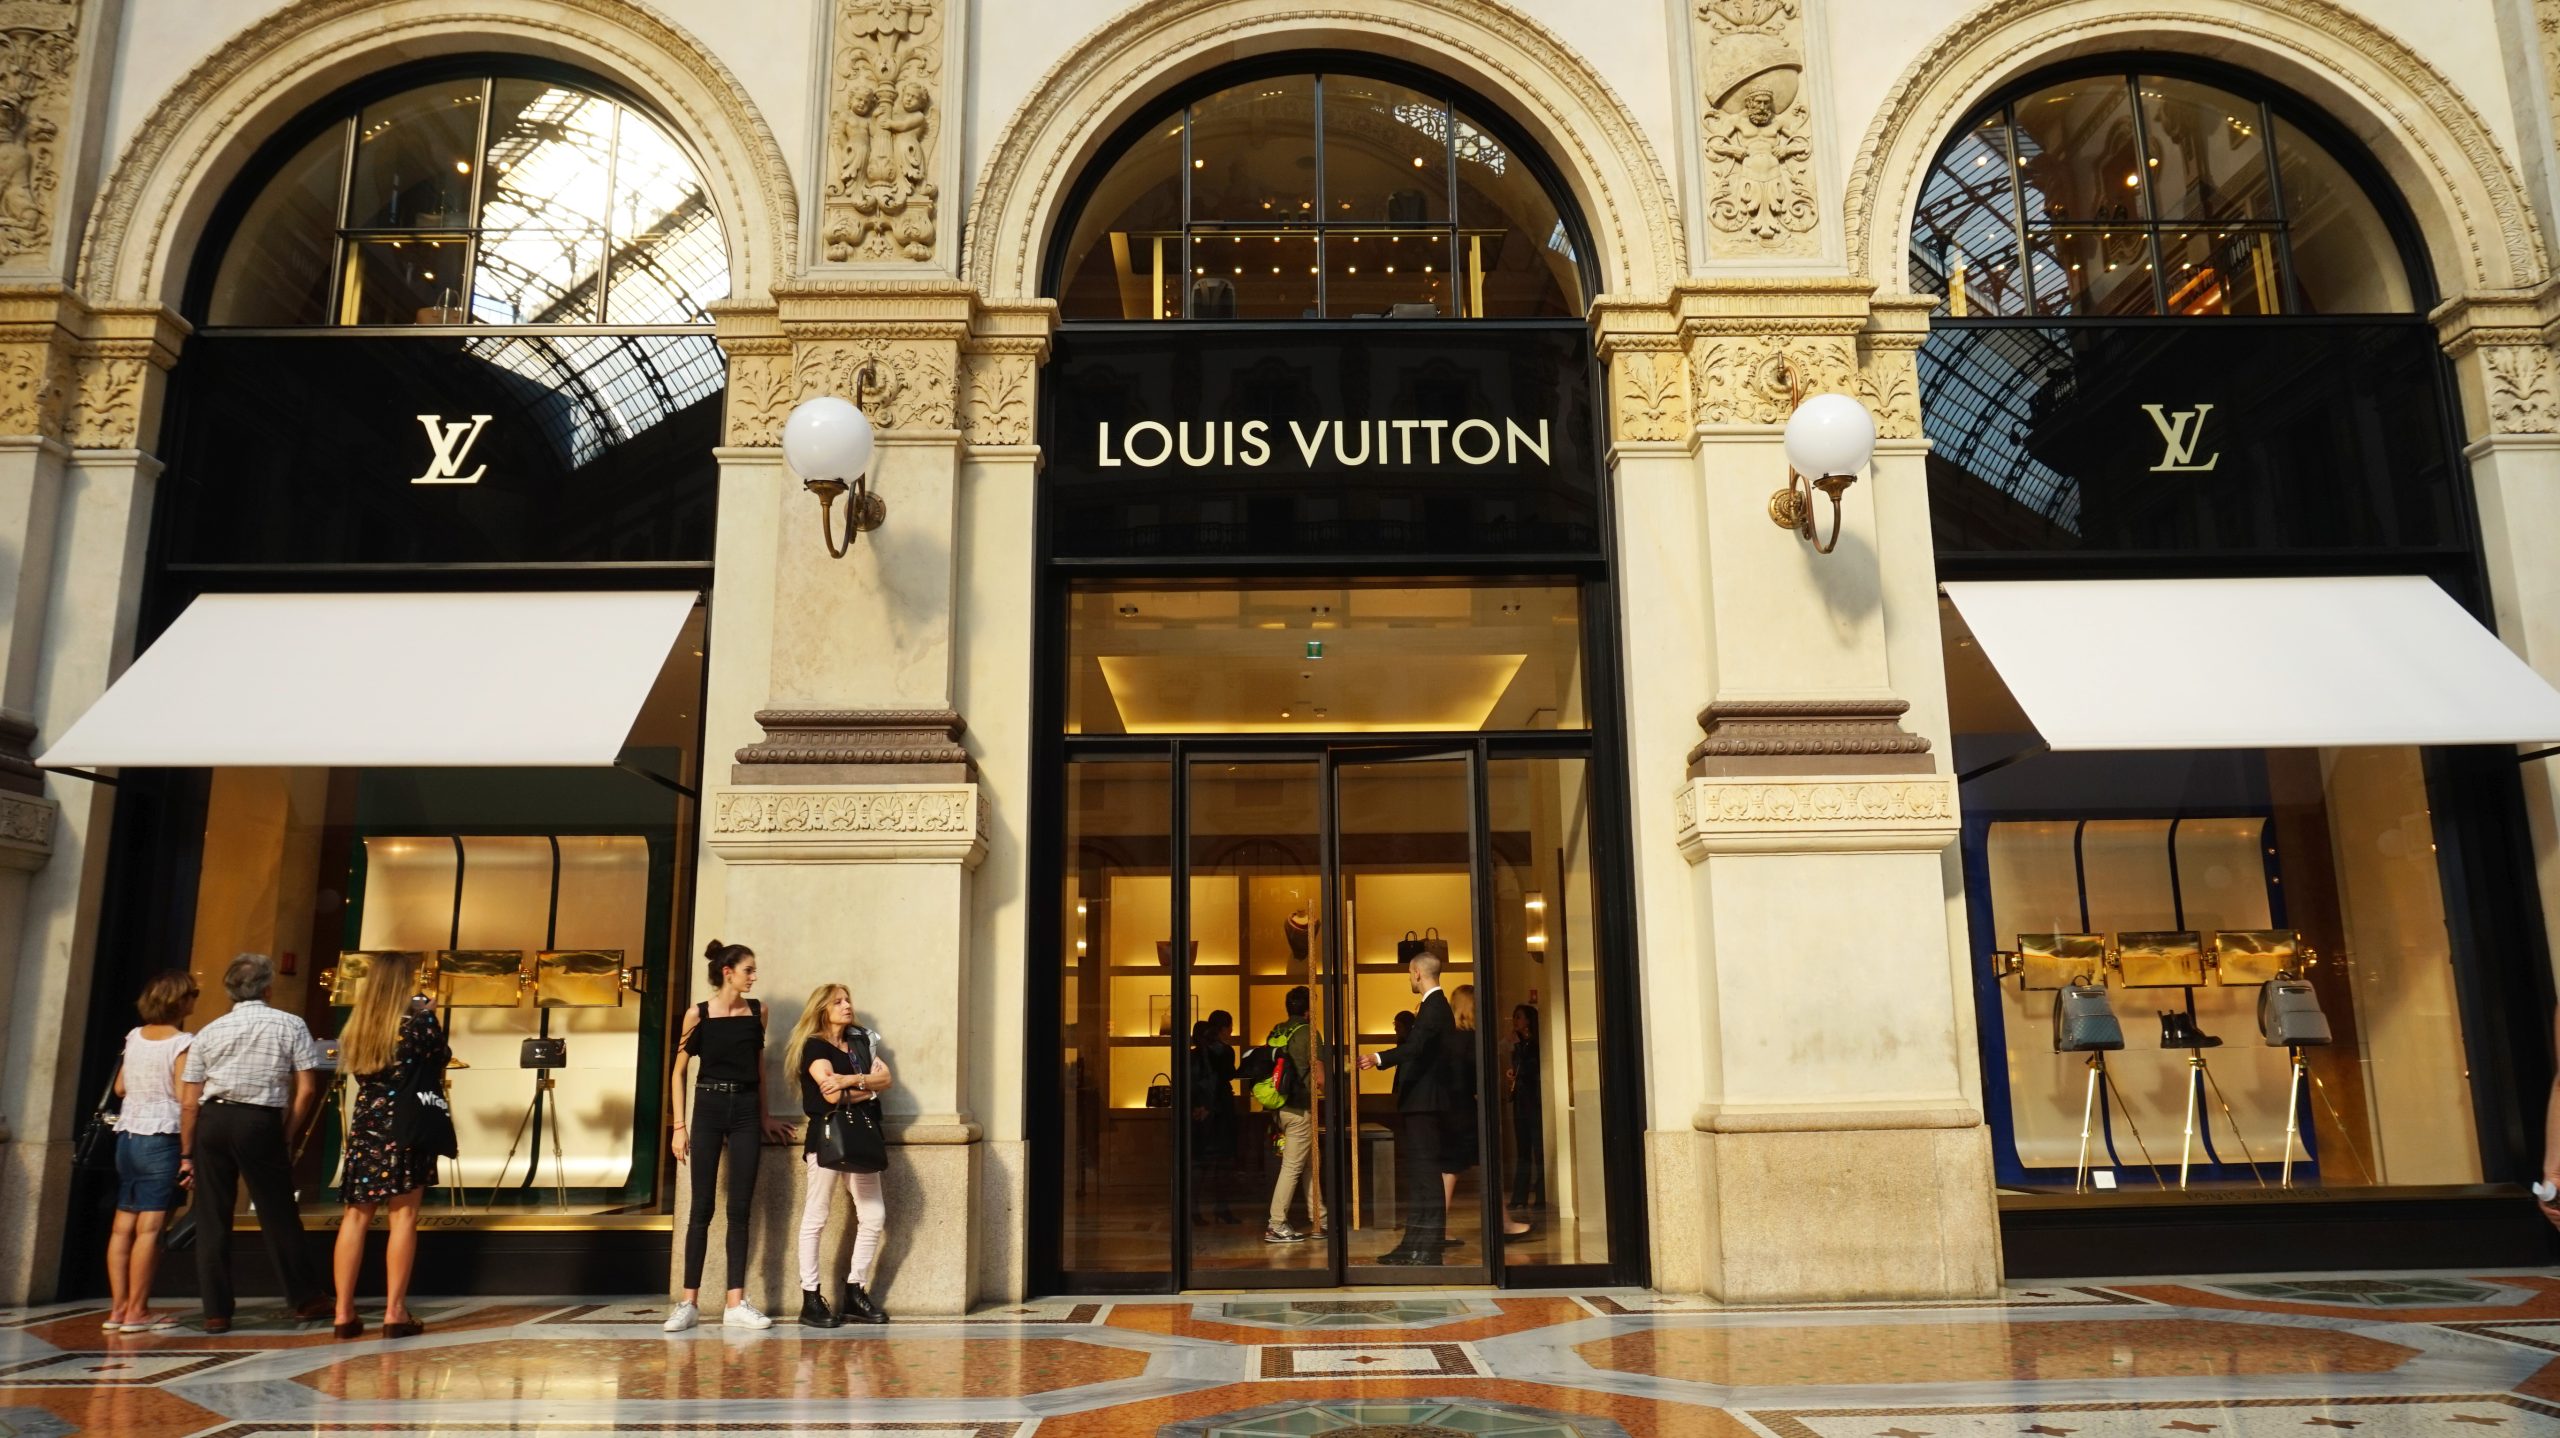 Luis Vuitton storefront in Milan, Italy